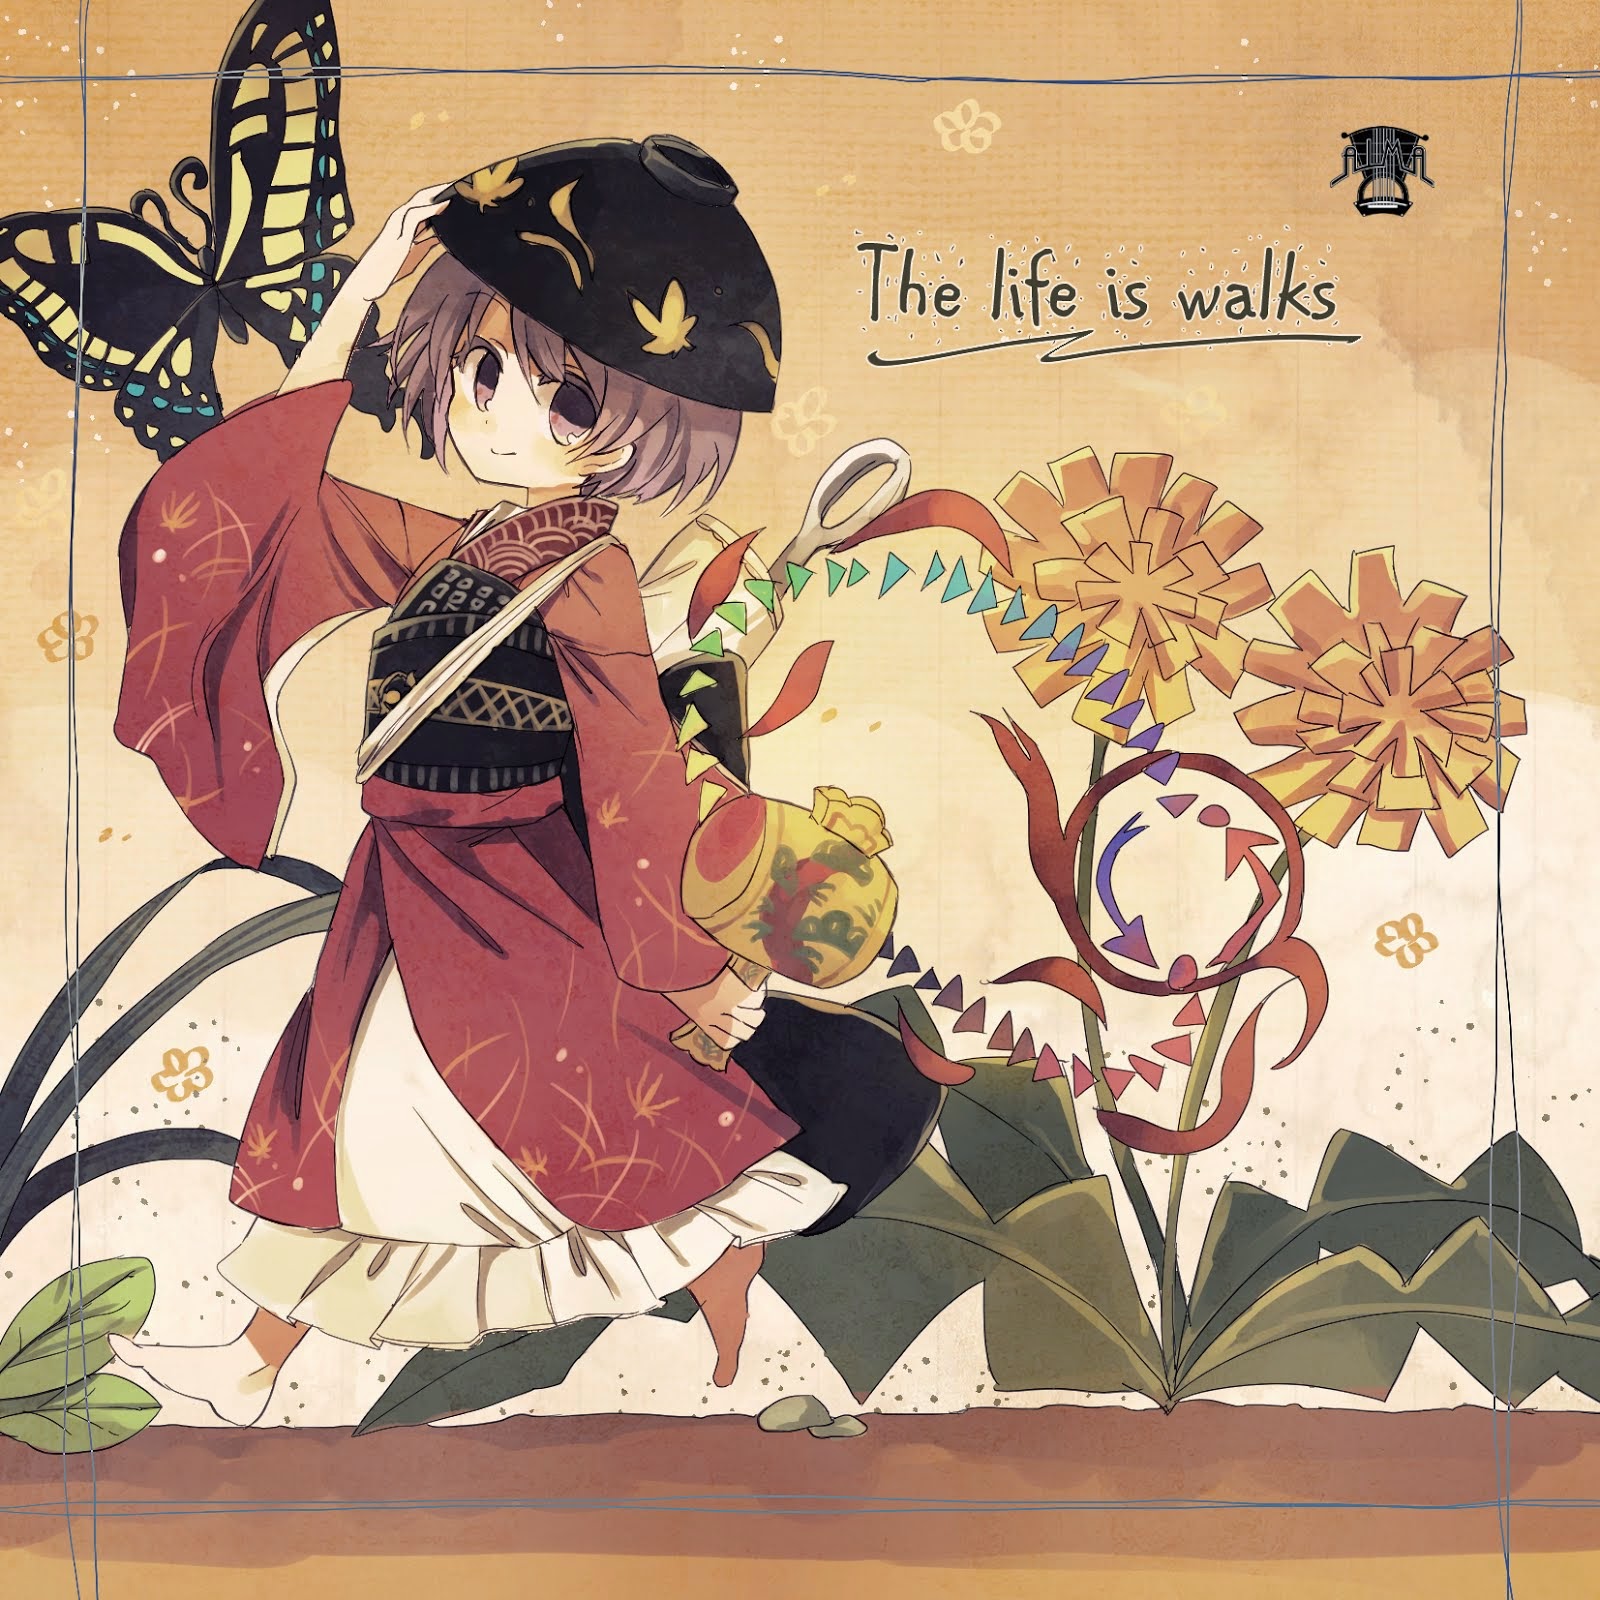 The life is walks